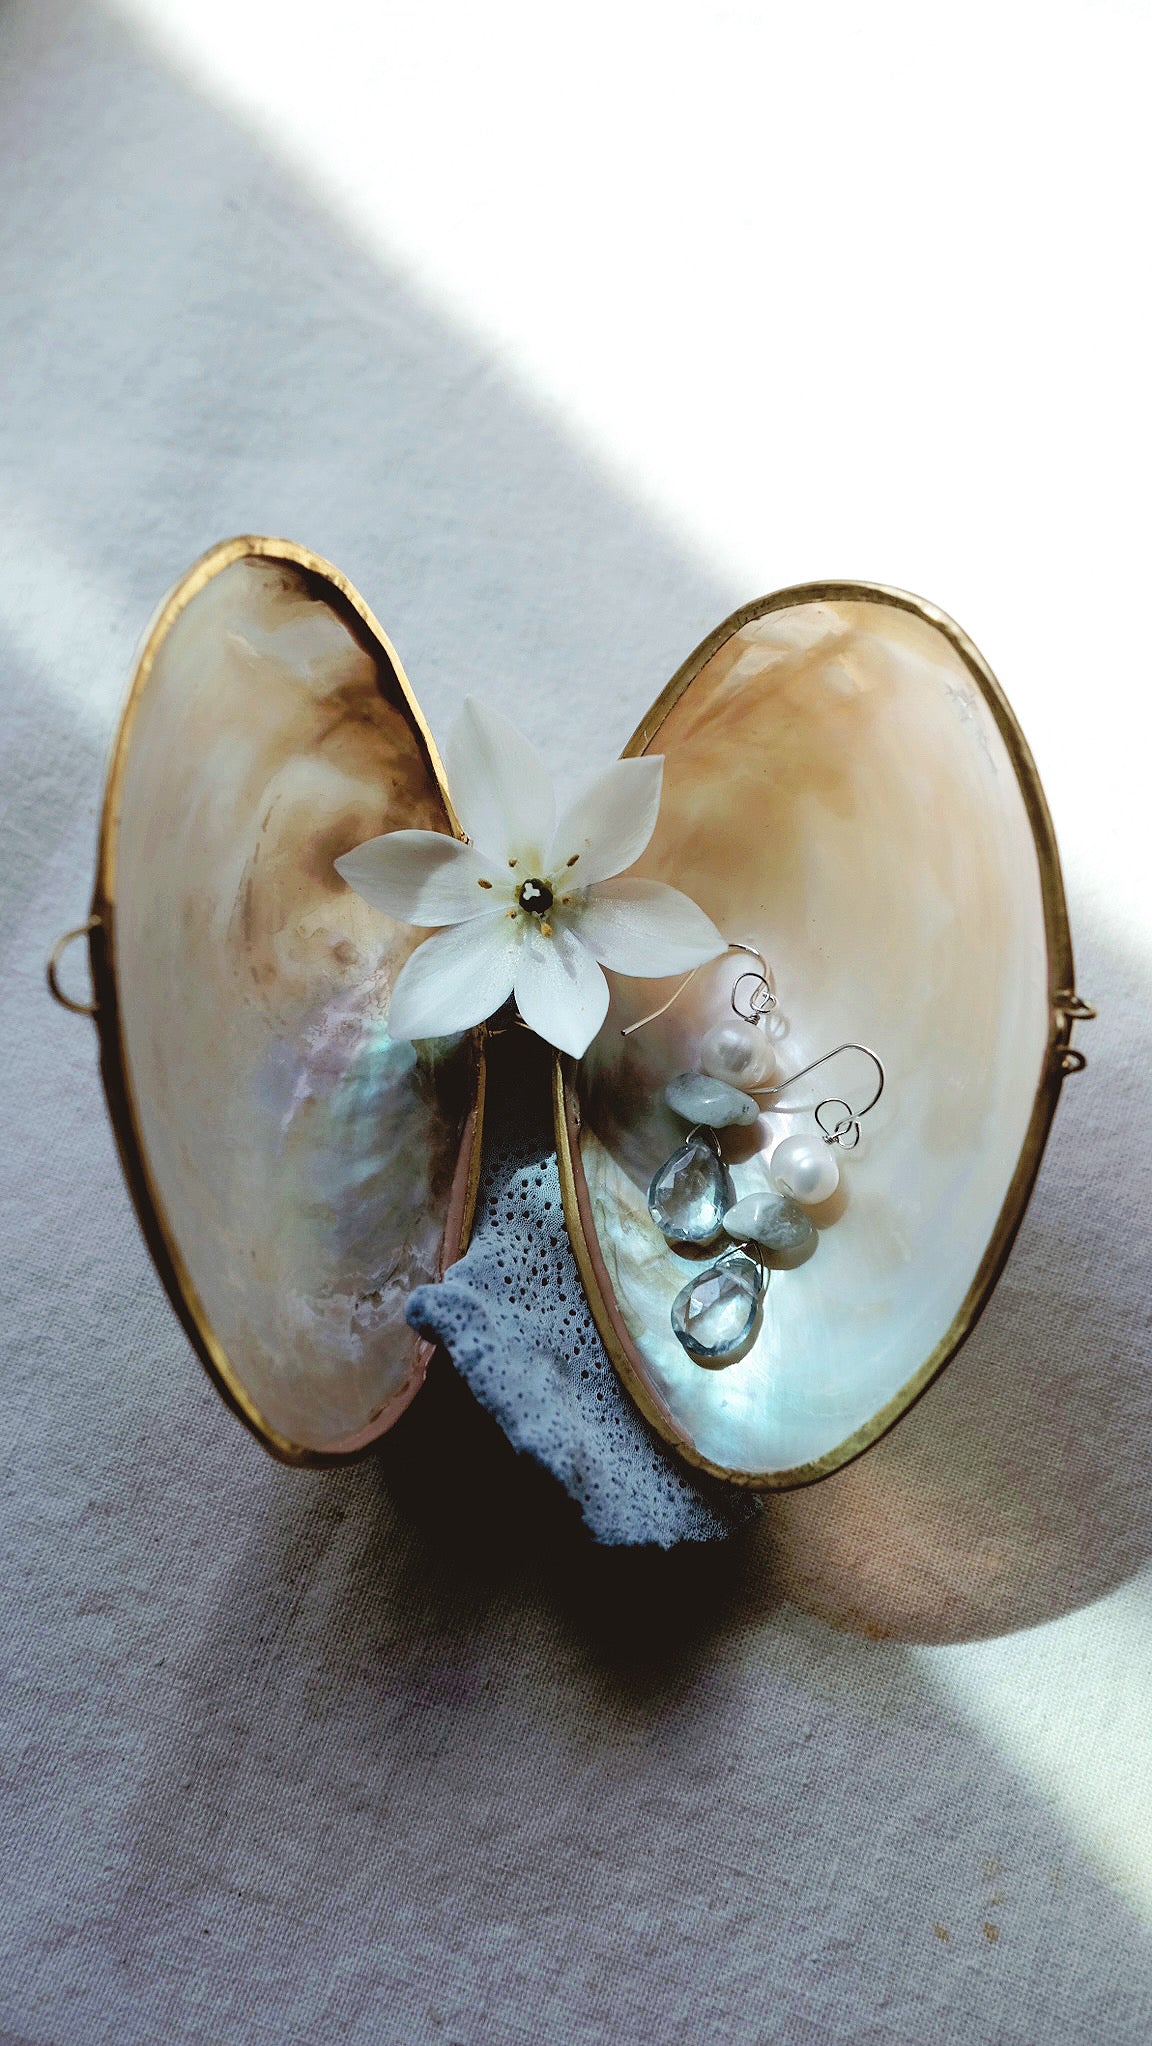 Water Nymph + Topaz + Aquamarine + Freshwater Pearl earrings